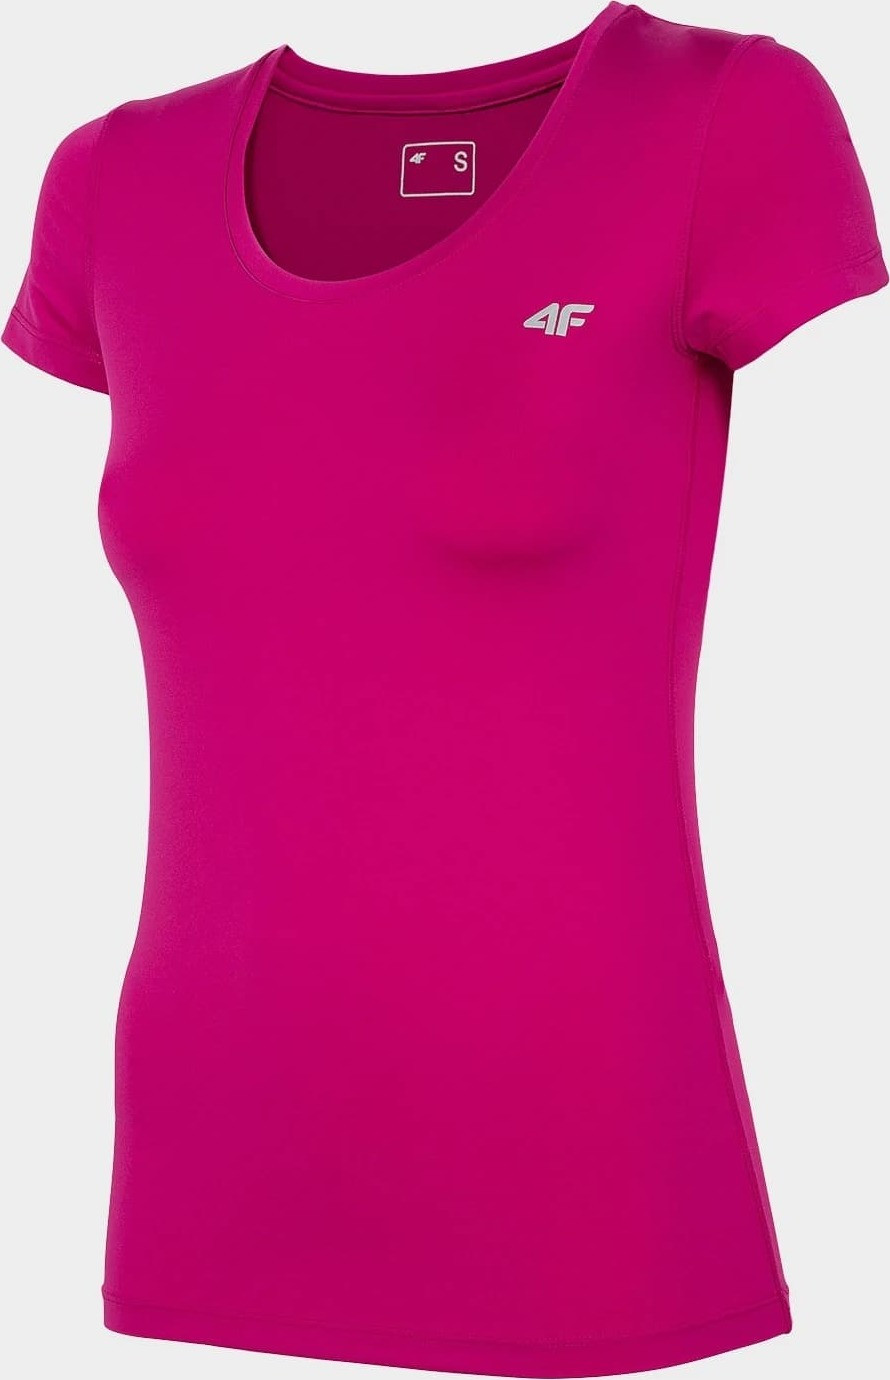 Dámské tričko 4F TSDF002 Růžové pink solid L